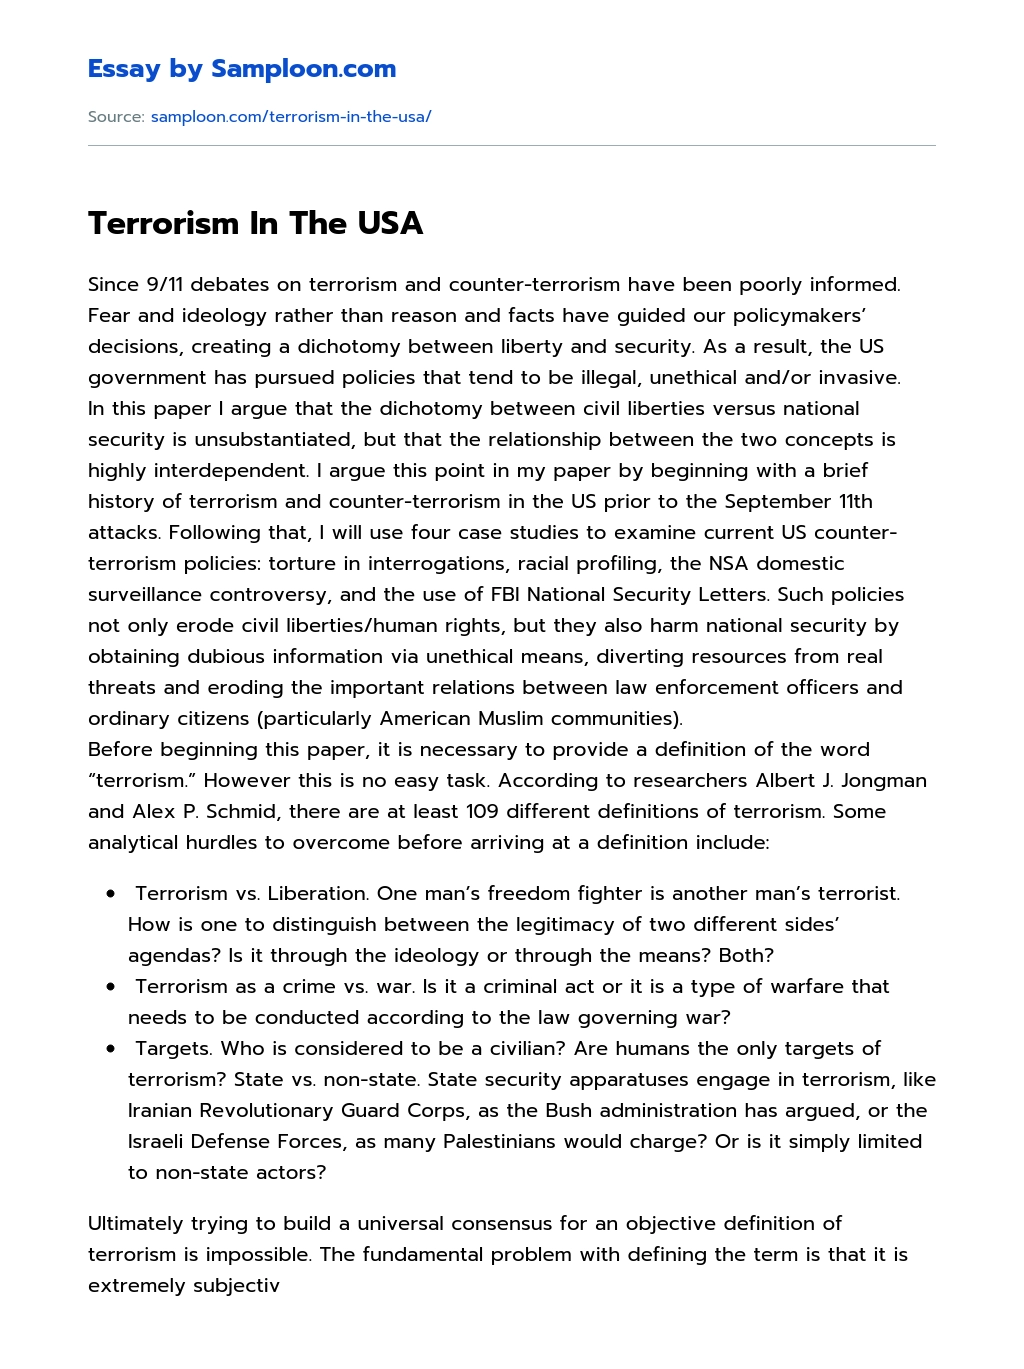 Terrorism In The USA essay